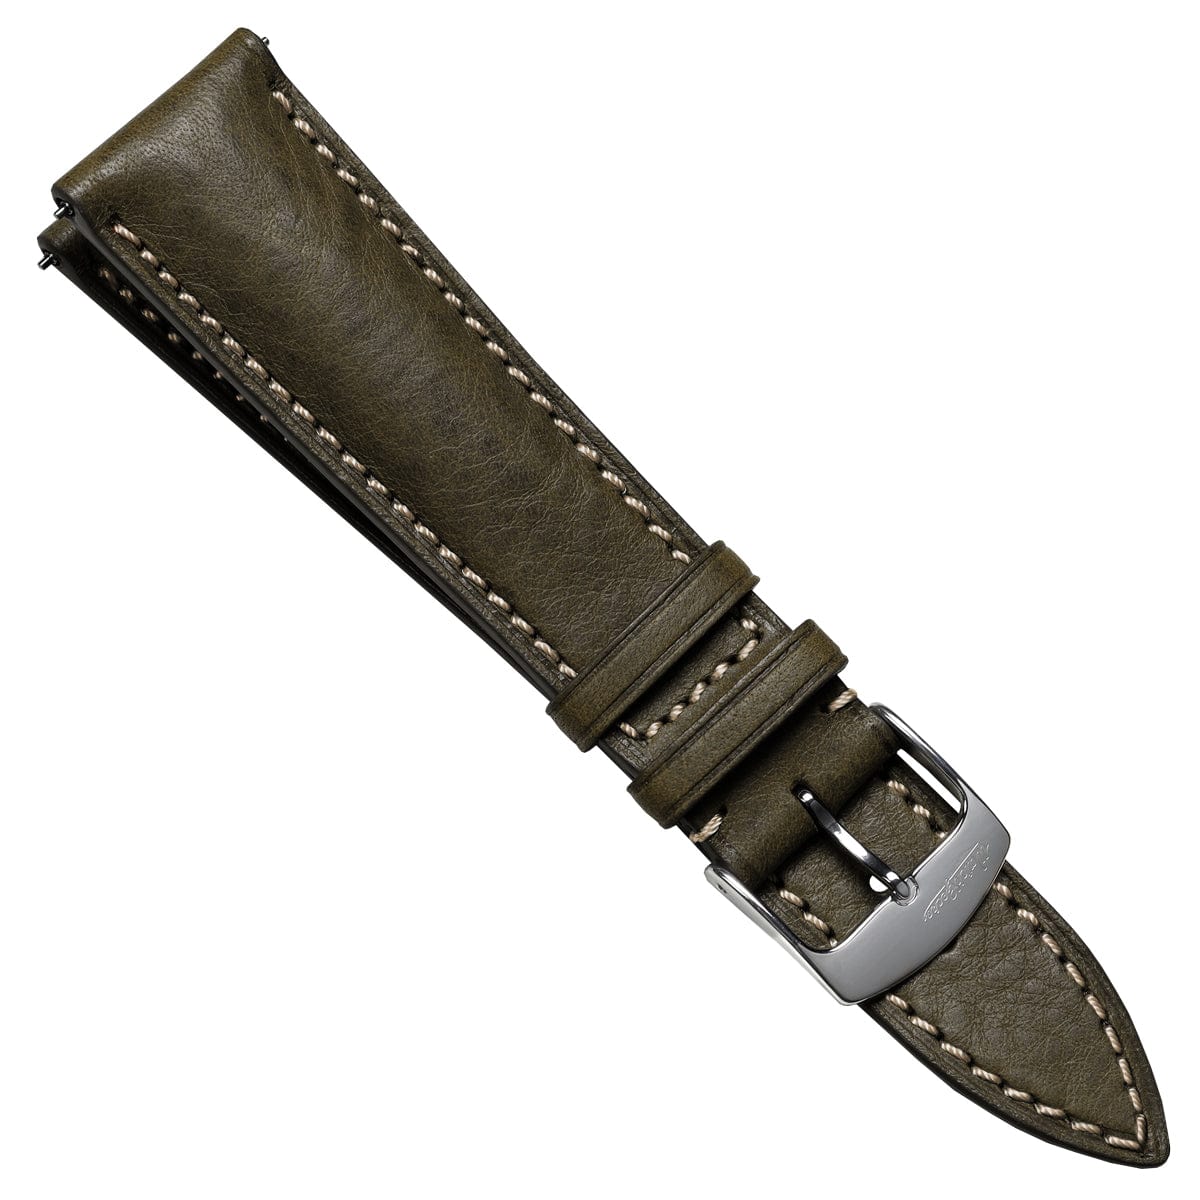 Stanton Badalassi Carlo Minerva Box Leather Padded Watch Strap - Olive Green